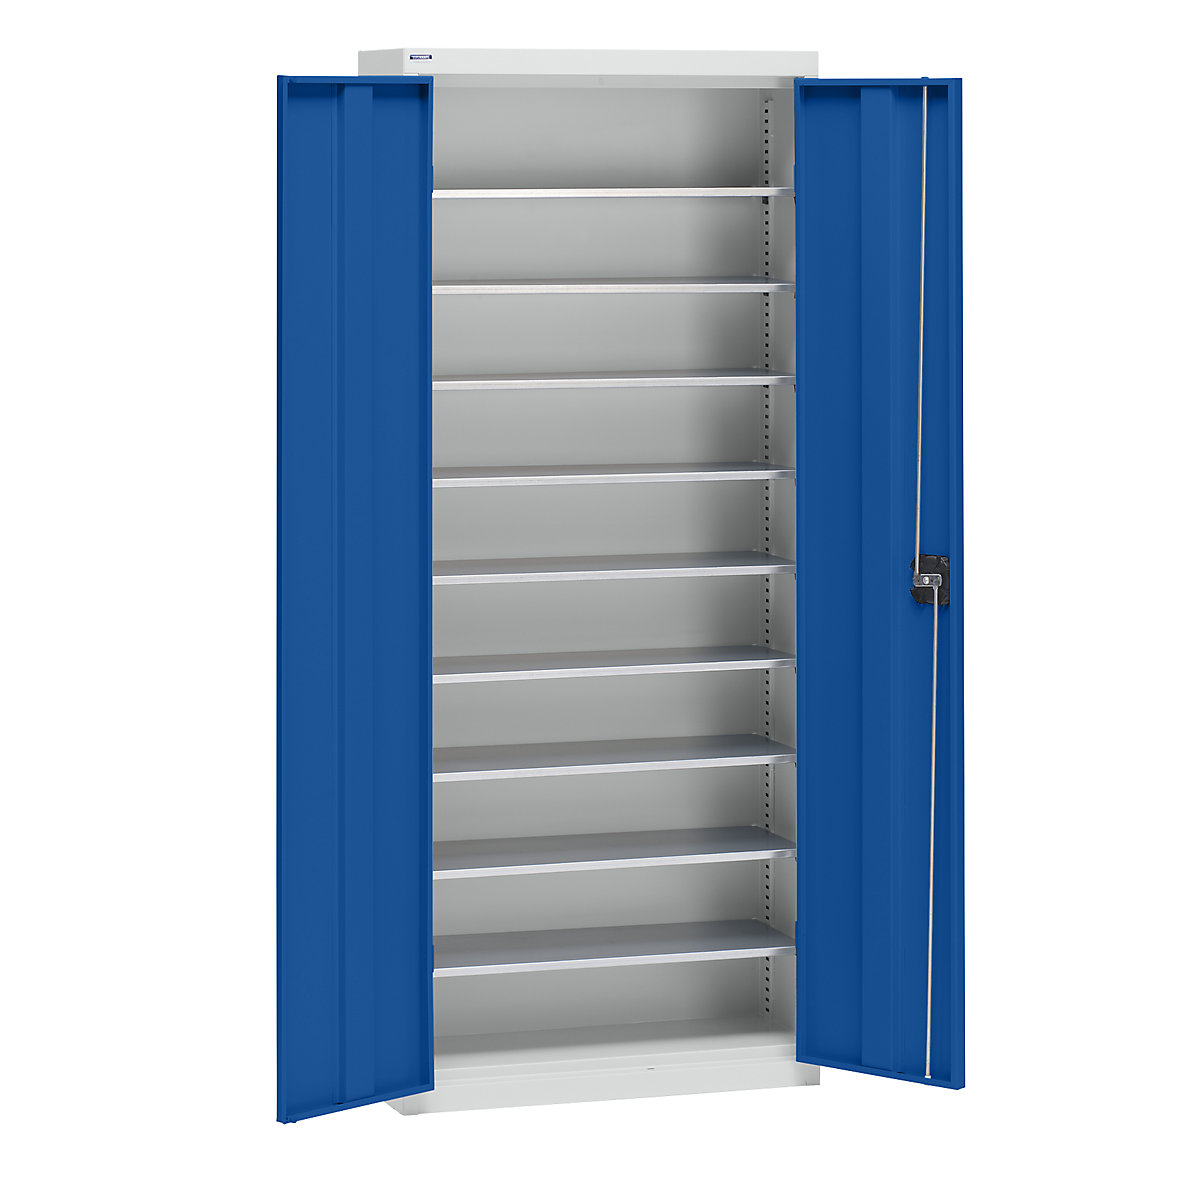 Storage cupboard made of sheet steel – eurokraft pro, height 1575 mm, light grey RAL 7035 / gentian blue RAL 5010, 9 shelves-8